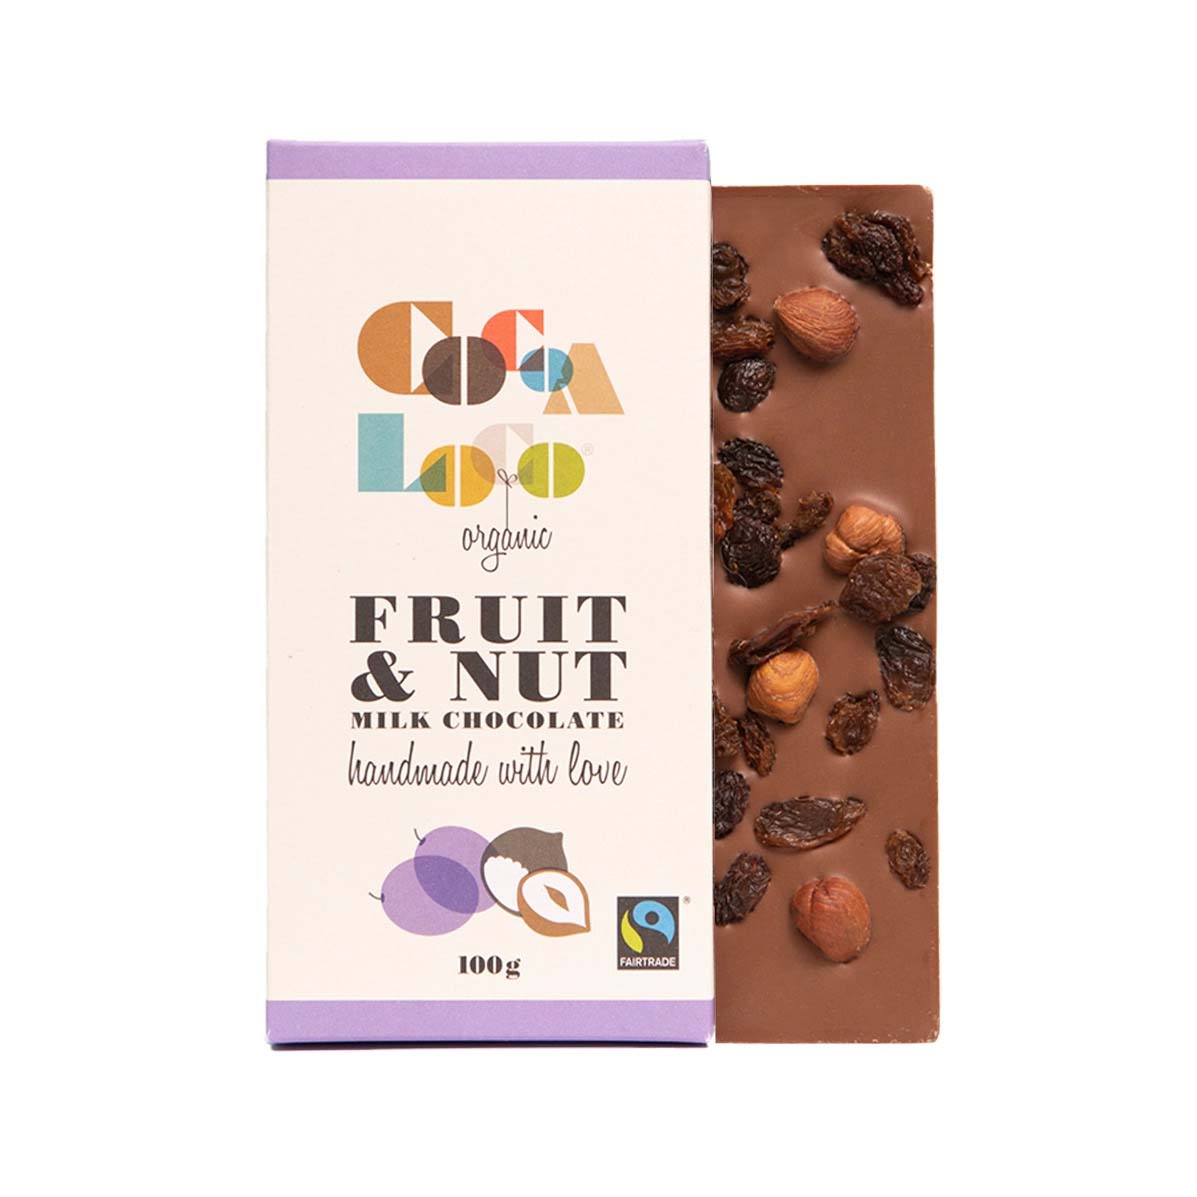 Cocoa Loco Milk Chocolate Fruit & Nut Bar - 100g